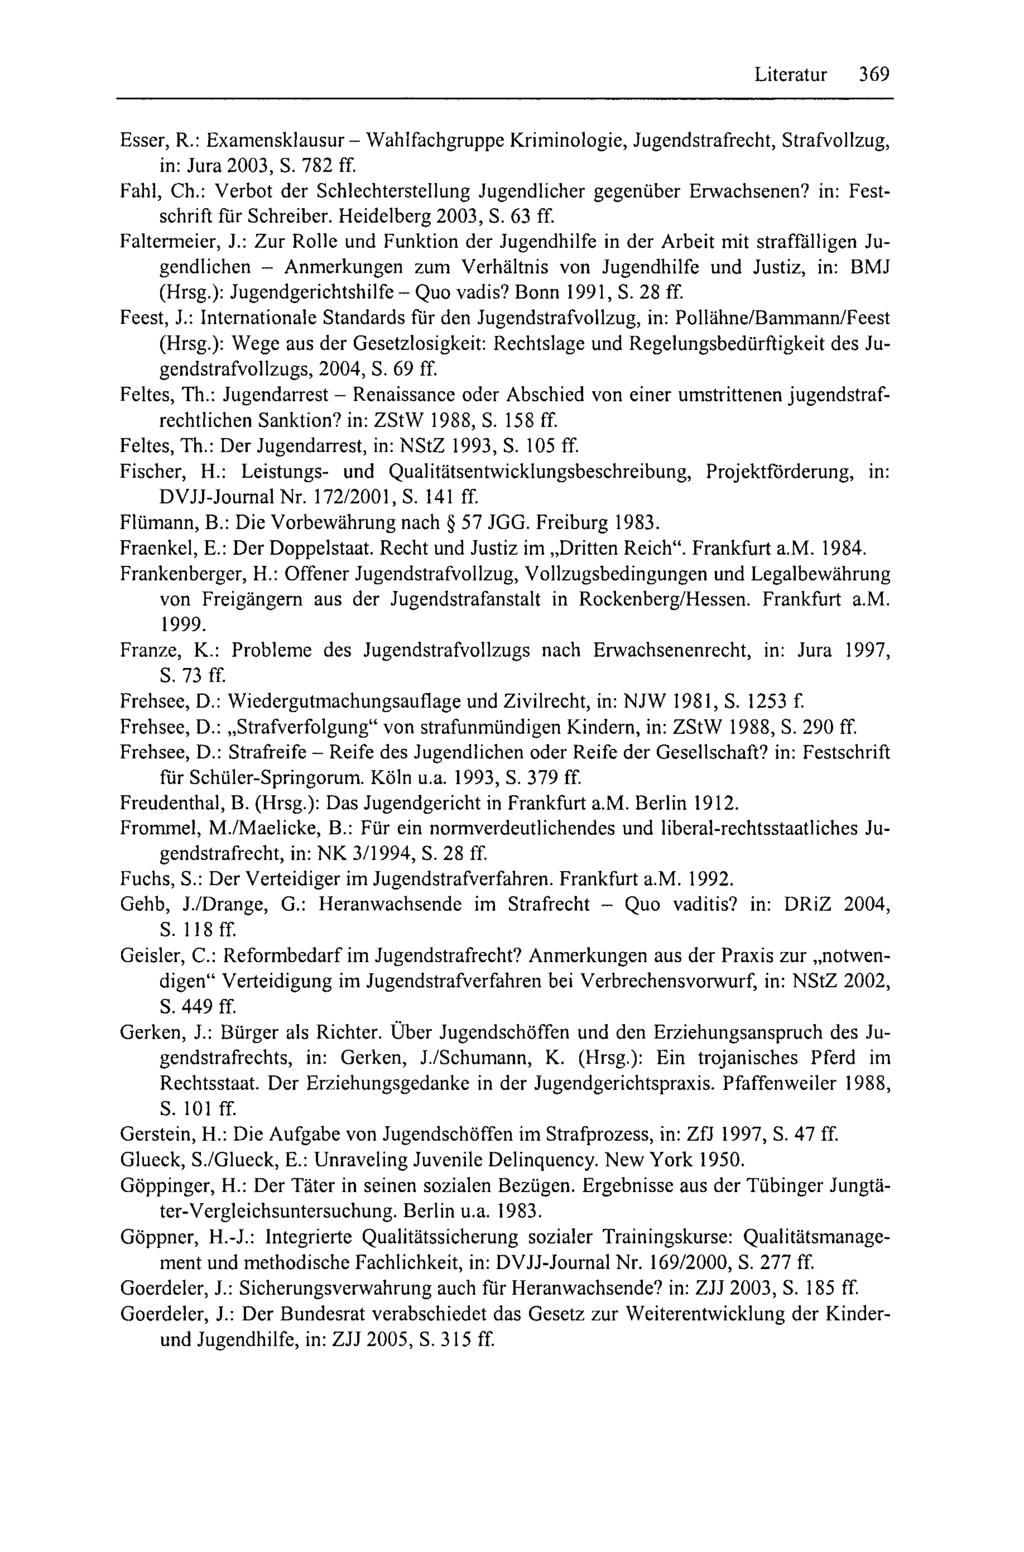 Literatur 369 Esser, R.: Examensklausur - Wahlfachgruppe Kriminologie, Jugendstrafrecht, Strafvollzug, in: Jura 2003,8.782 ff Fahl, Ch.